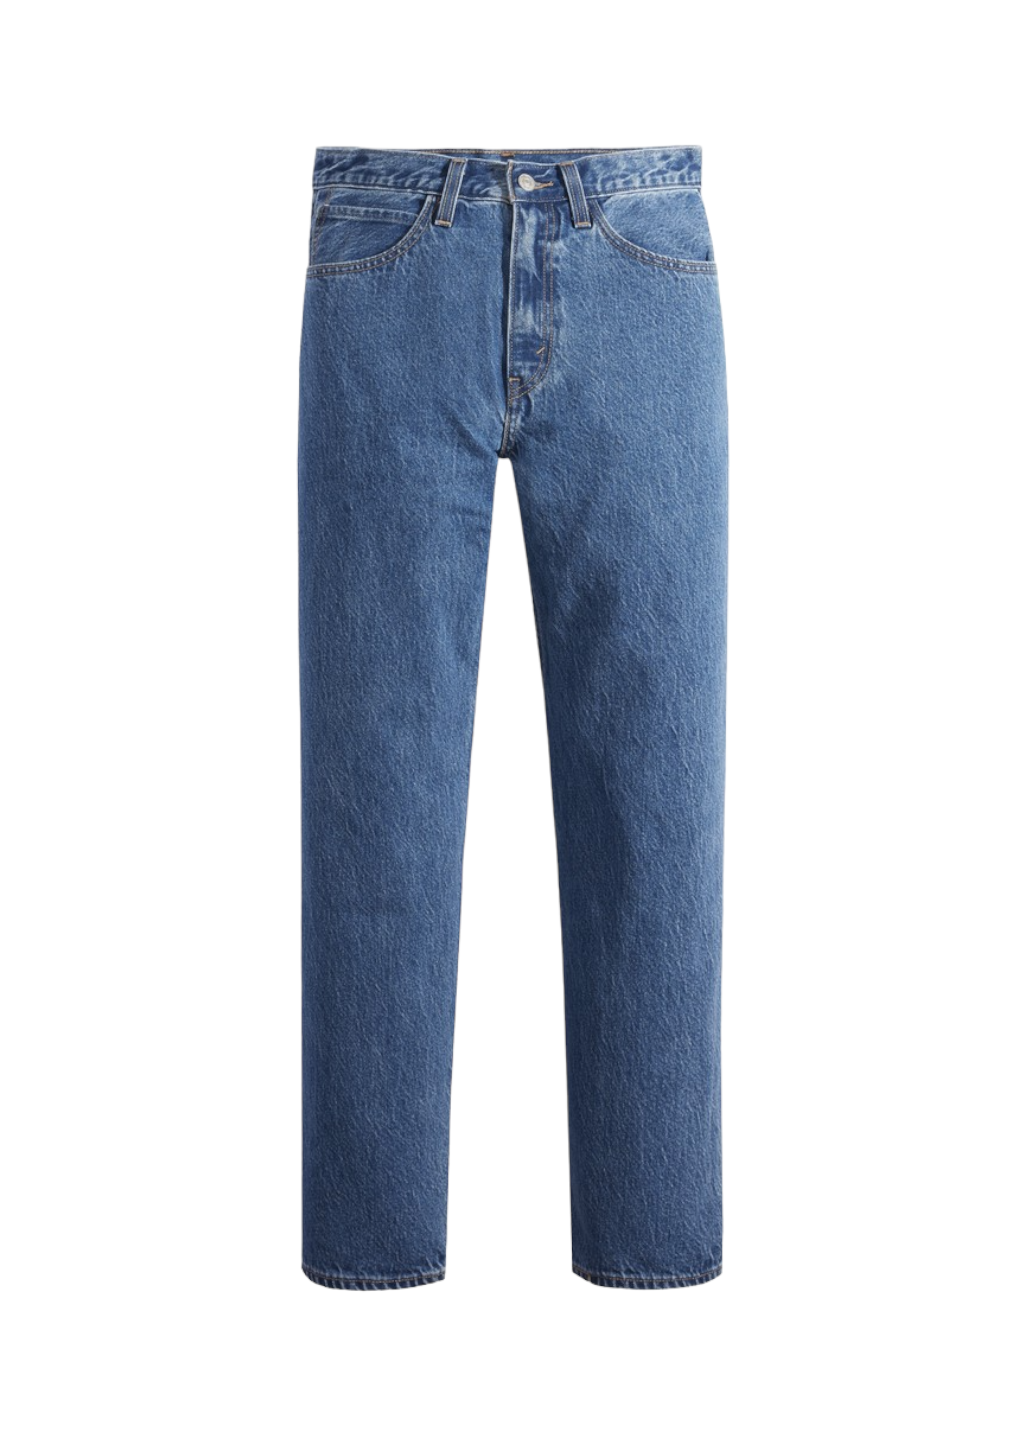 Levi's x Farm Rio Jeans / High waist printed jeans / summer / blue sky /